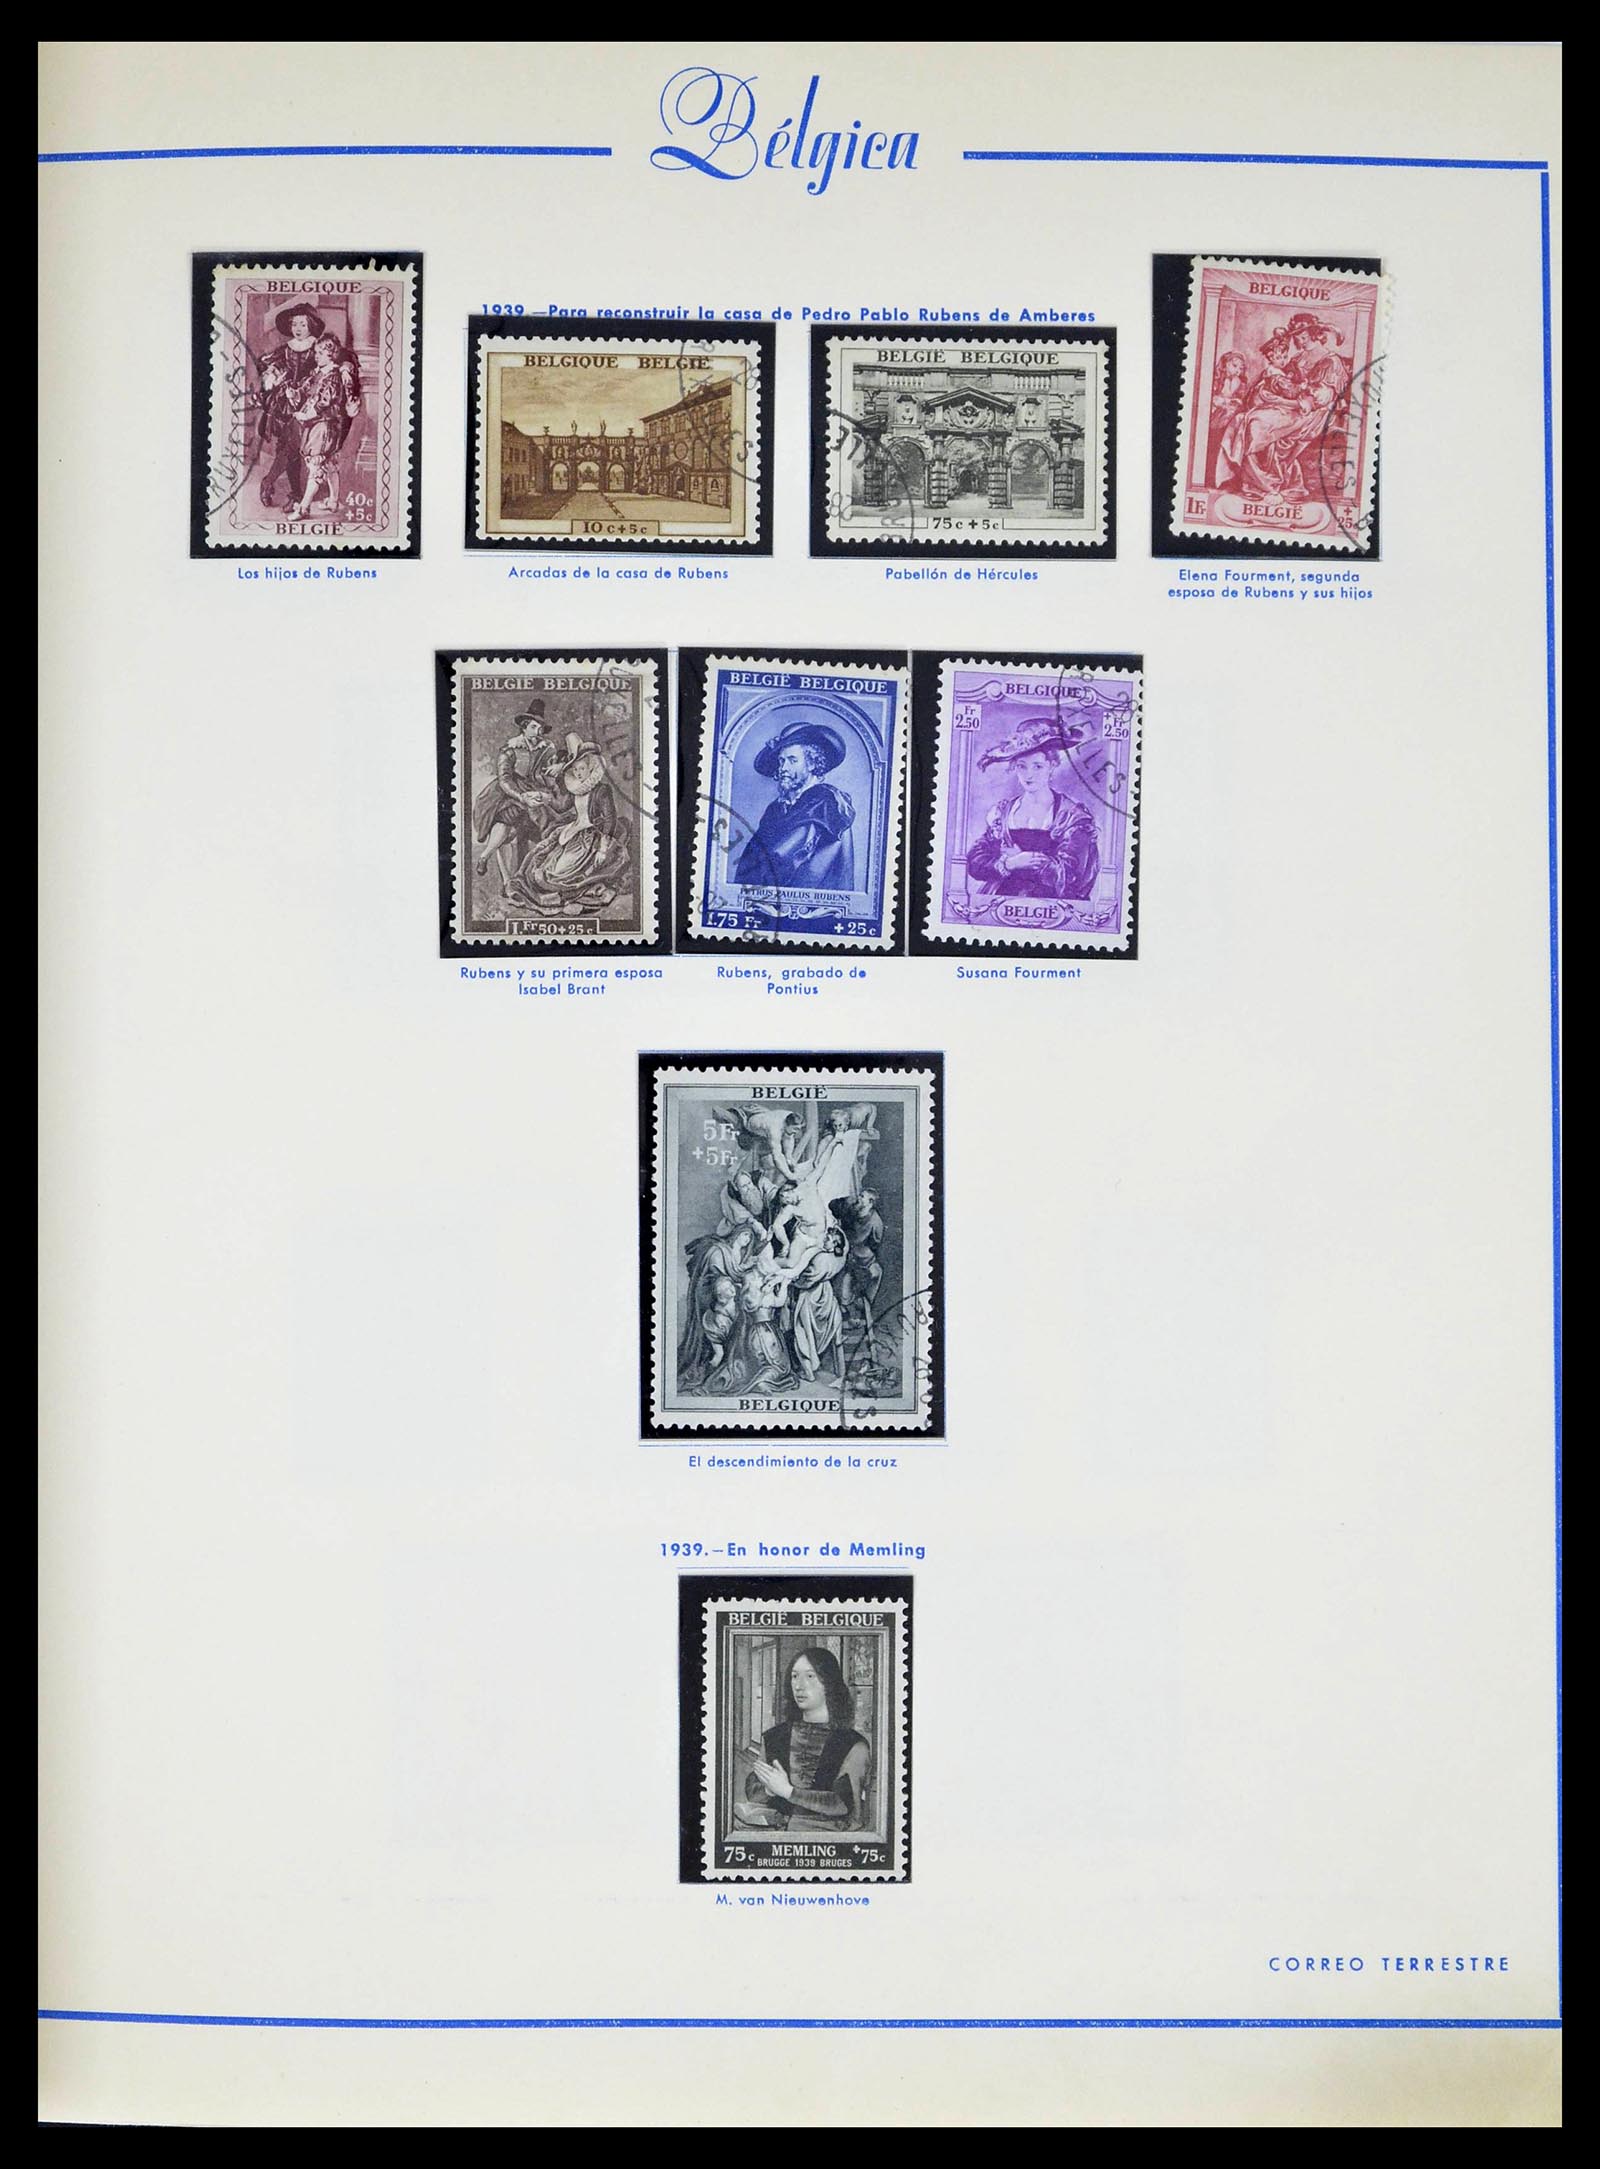 39230 0034 - Stamp collection 39230 Belgium 1849-1976.